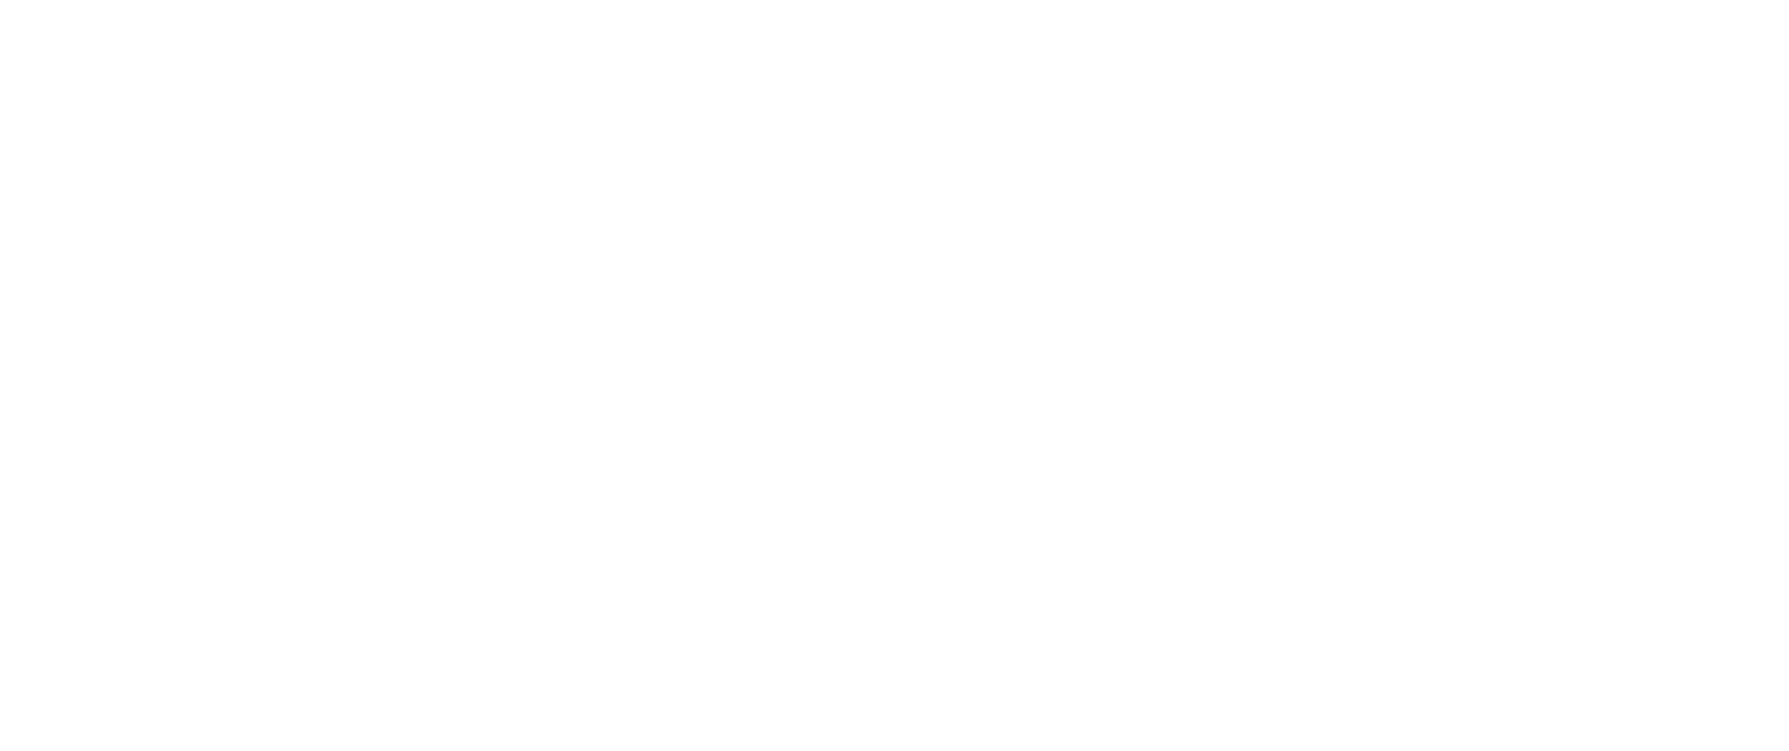 The Curious Case of Natalia Grace logo